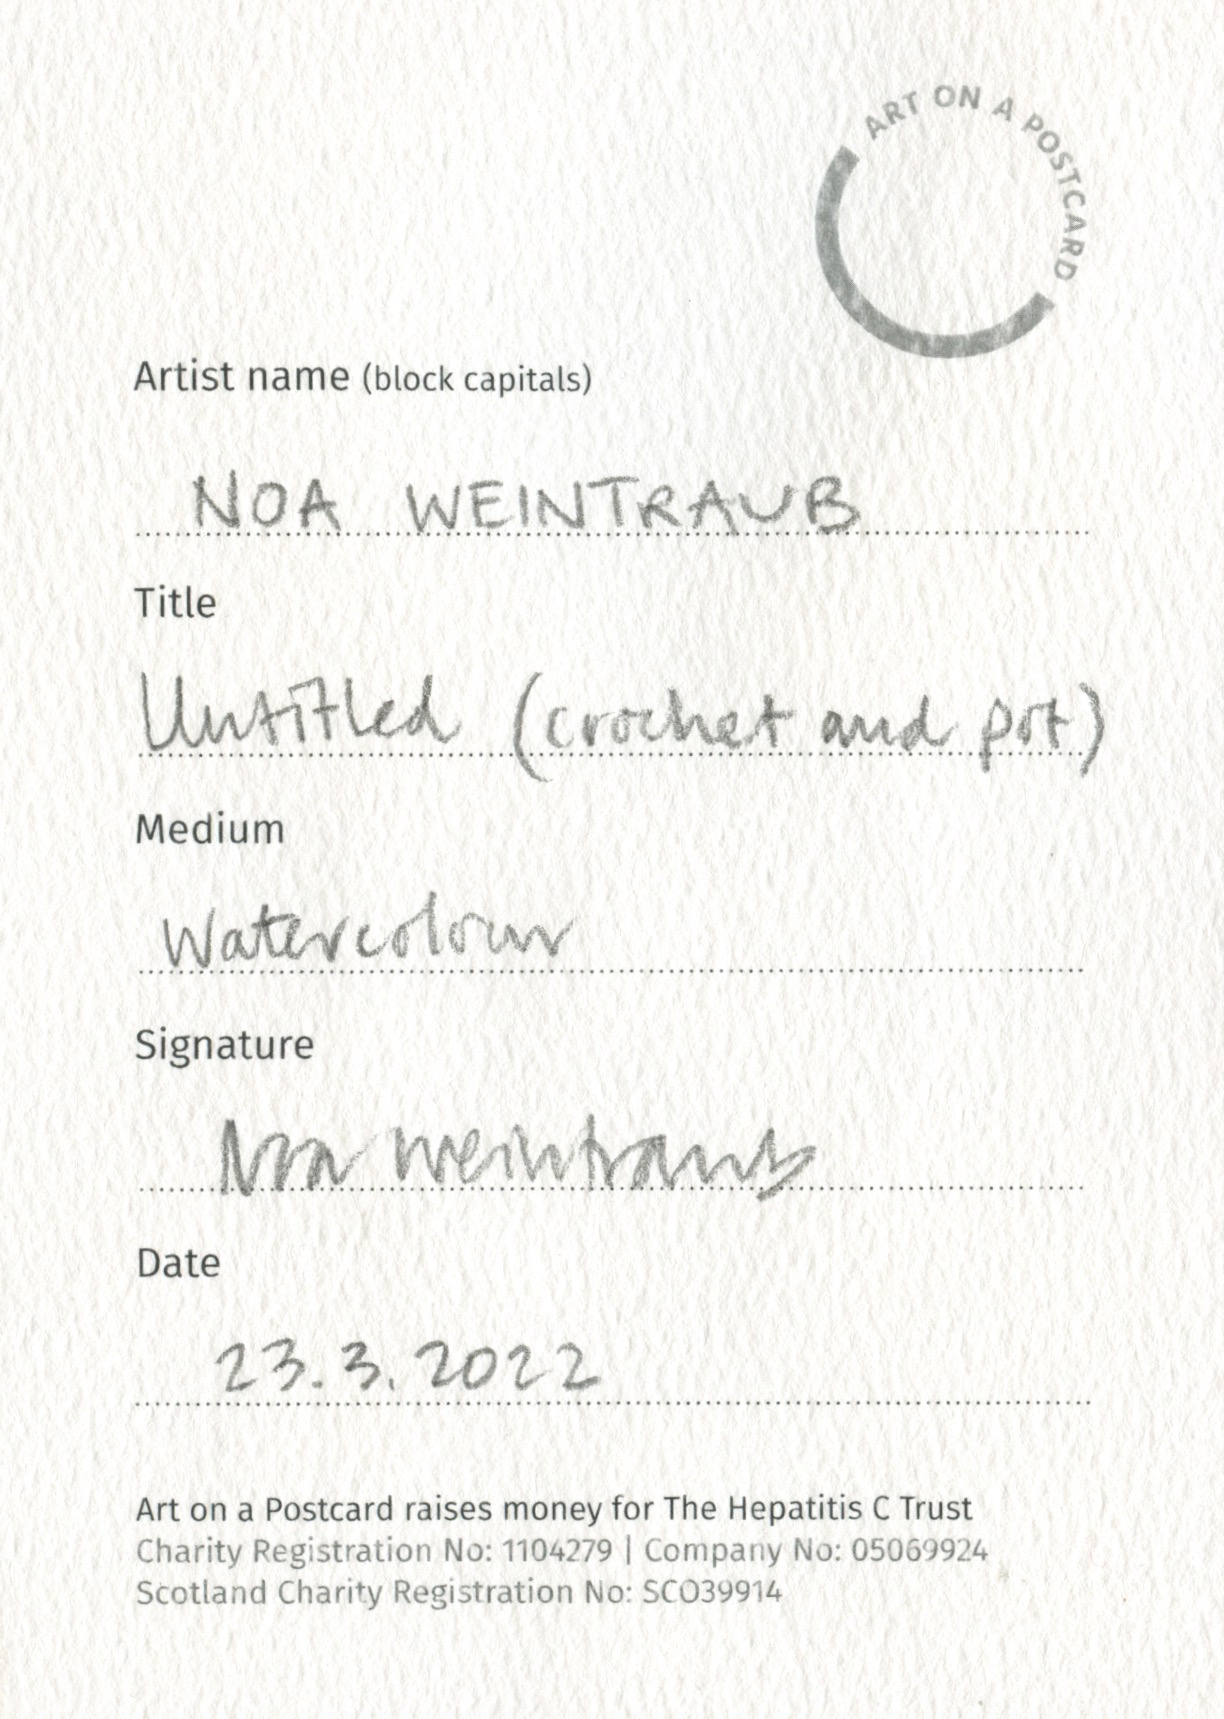 40. Noa Weintraub - Untitled (Crochet and Pot) - BACK